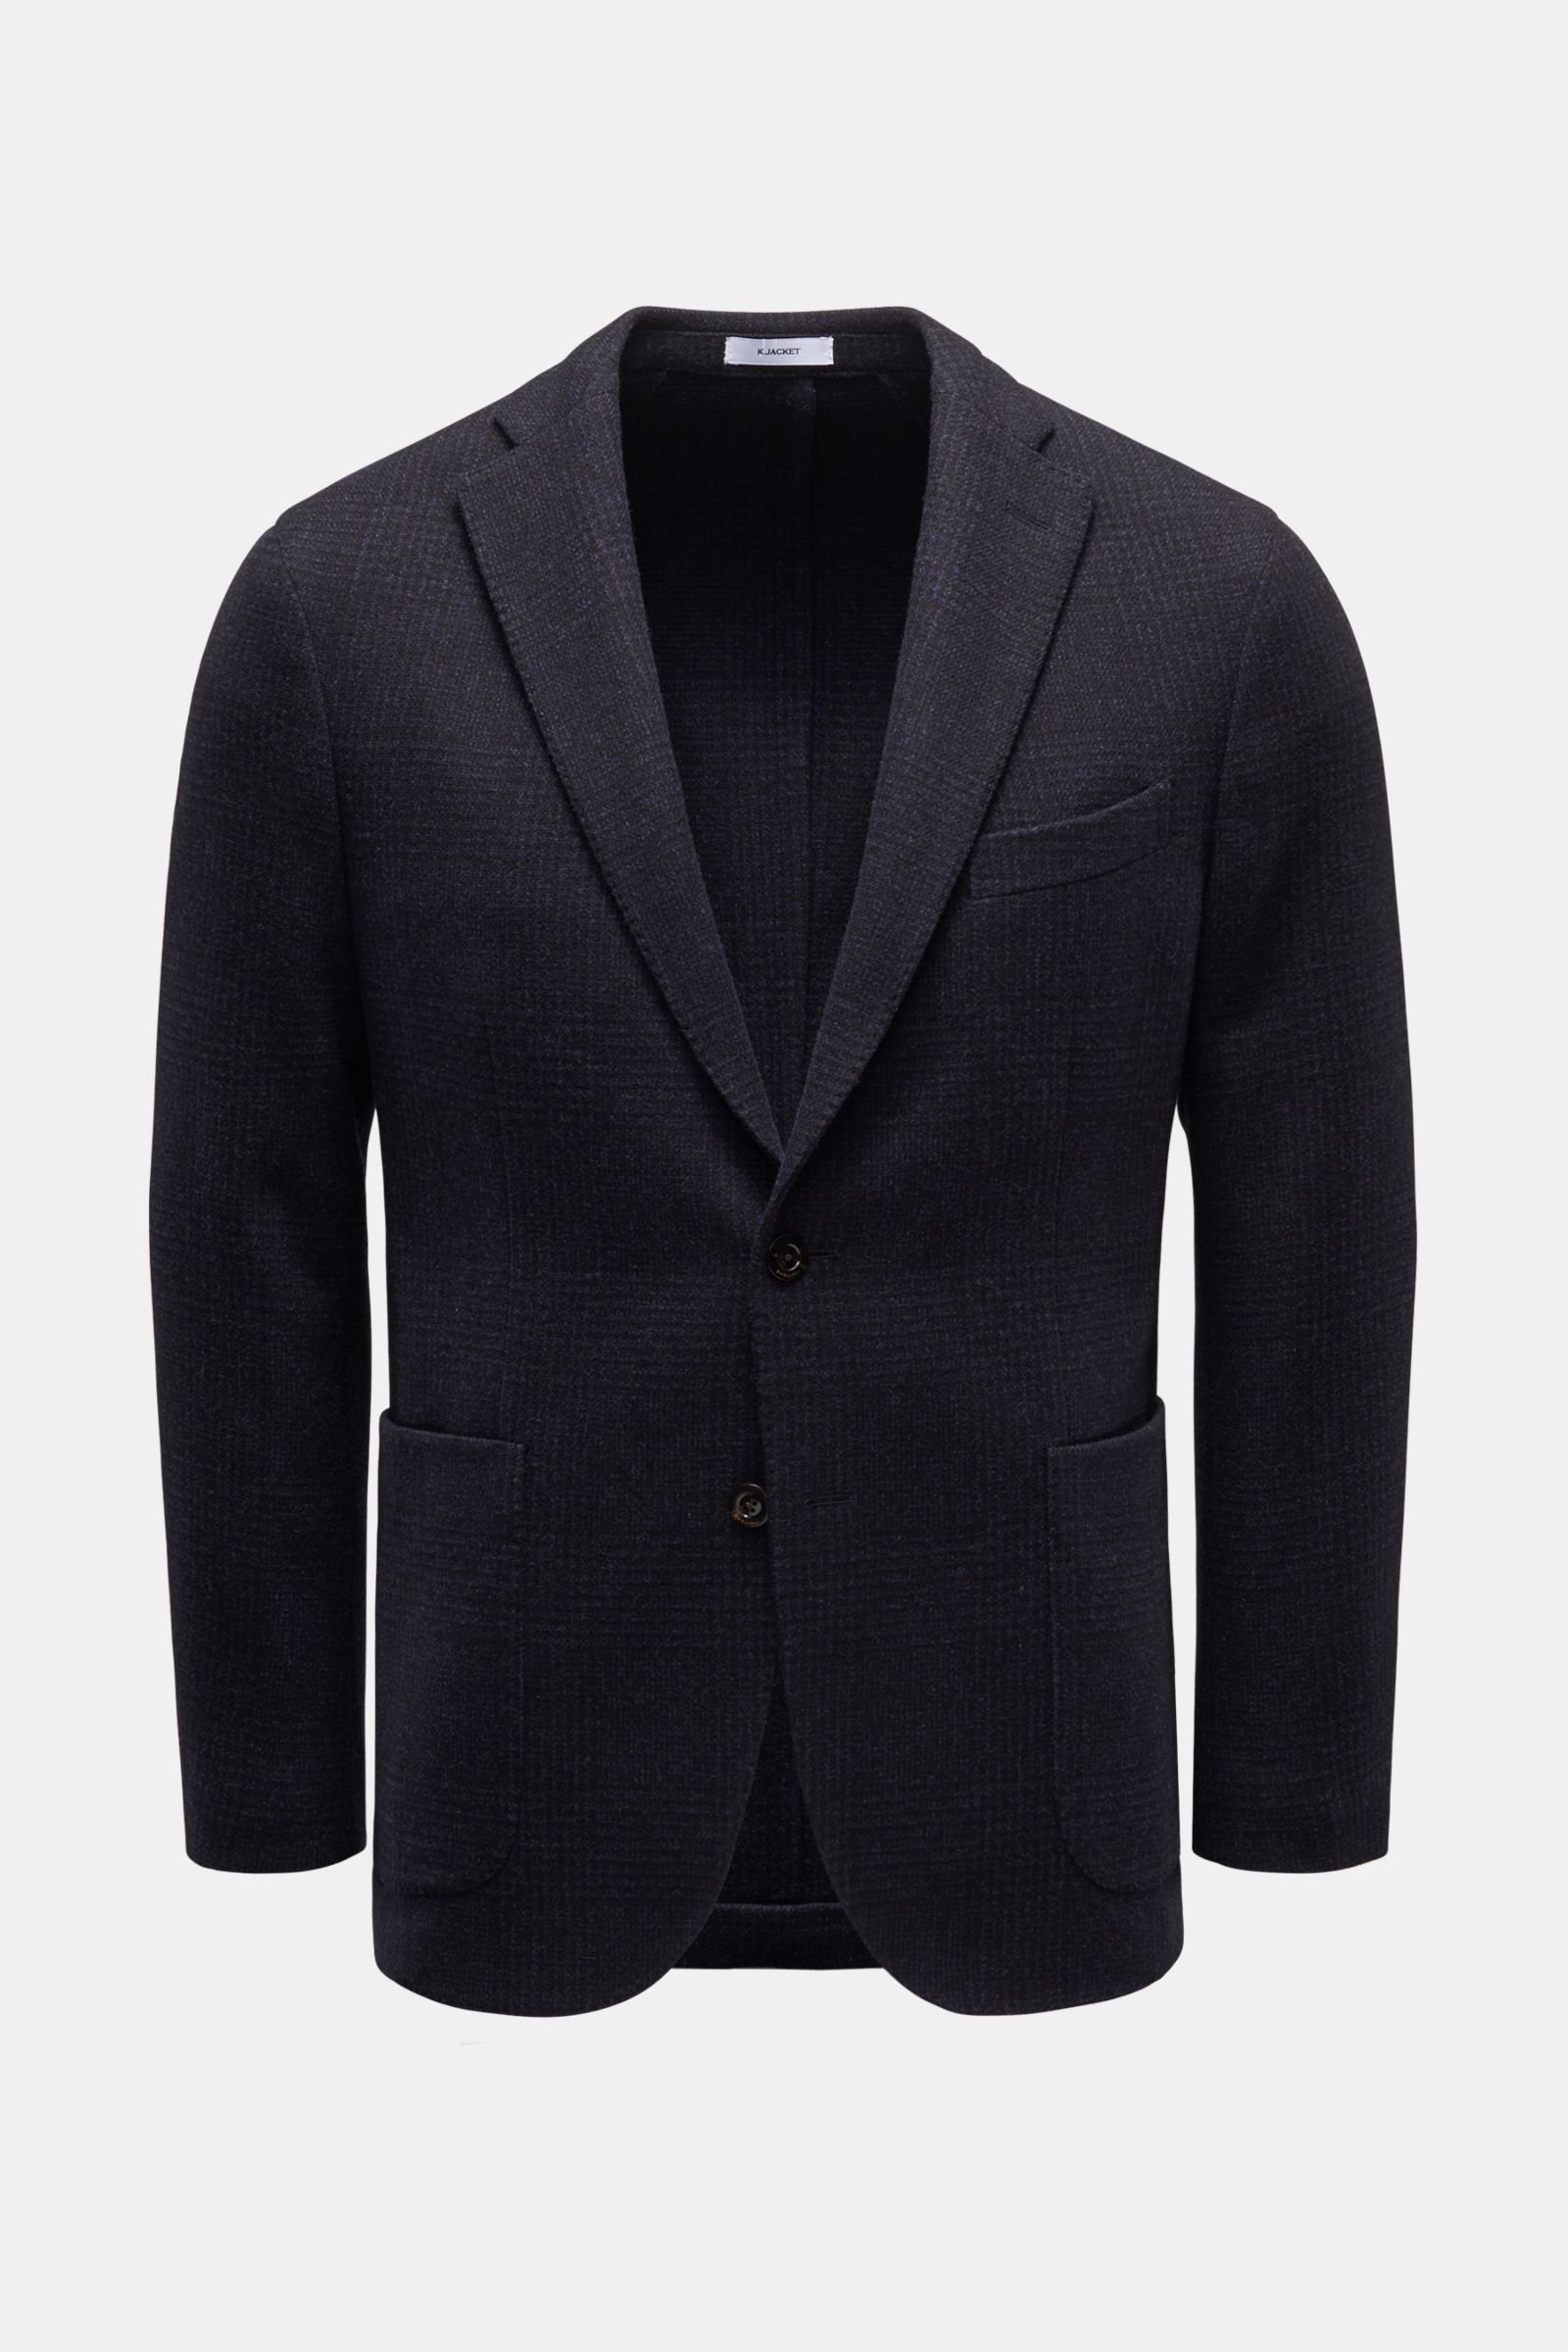 Smart-casual jacket 'K. Jacket' navy/black checked